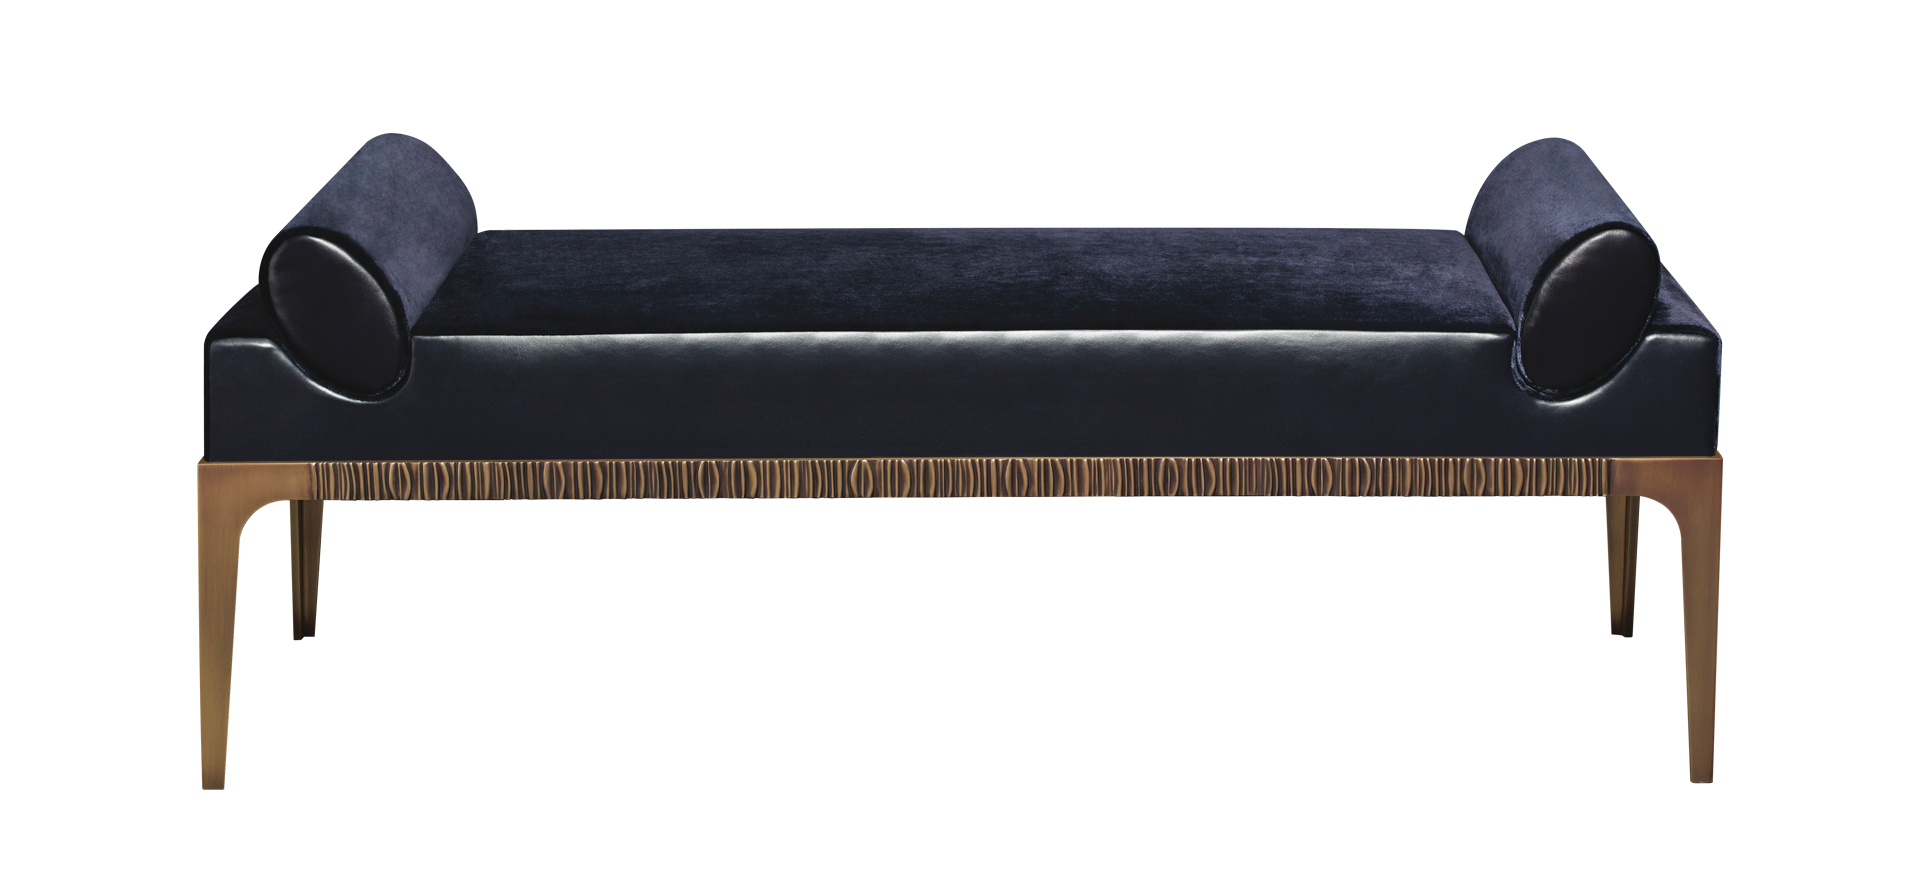 Montagu&nbsp;— бронзовая кушетка с тканевой обивкой из коллекции The London Collection компании Promemoria | Promemoria